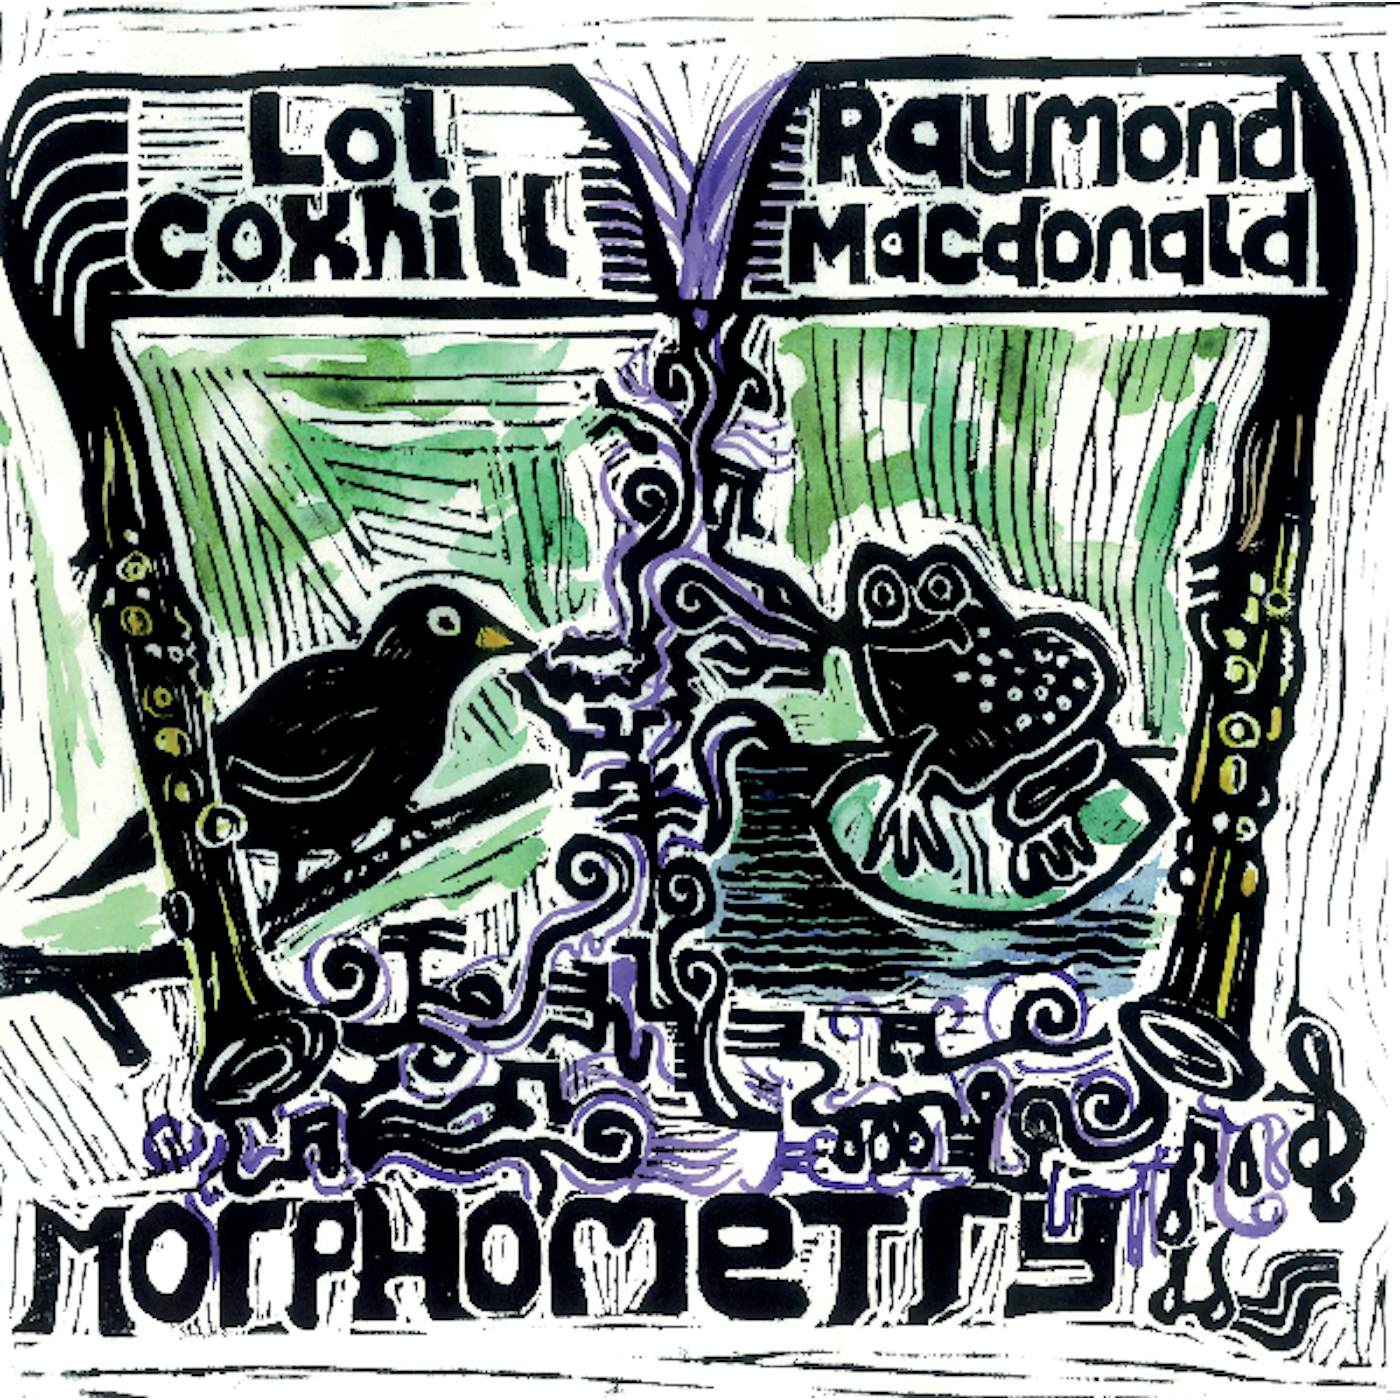 Lol Coxhill / Raymond Macdonald MORPHOMETRY Vinyl Record